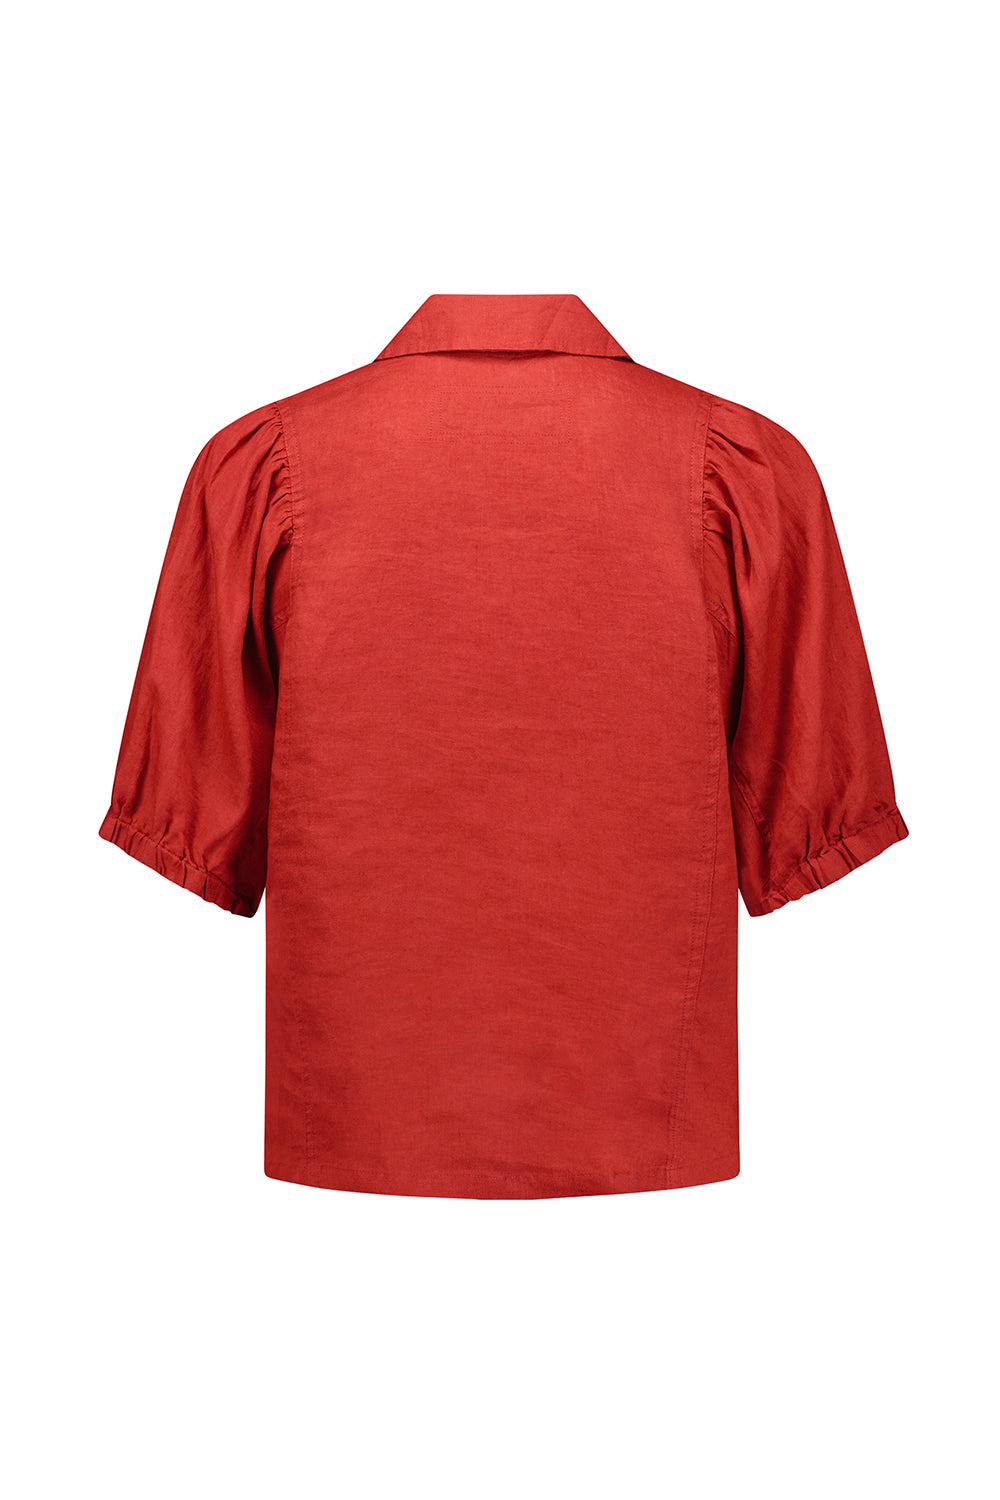 Adorn Shirt - Chilli - Shirt VERGE